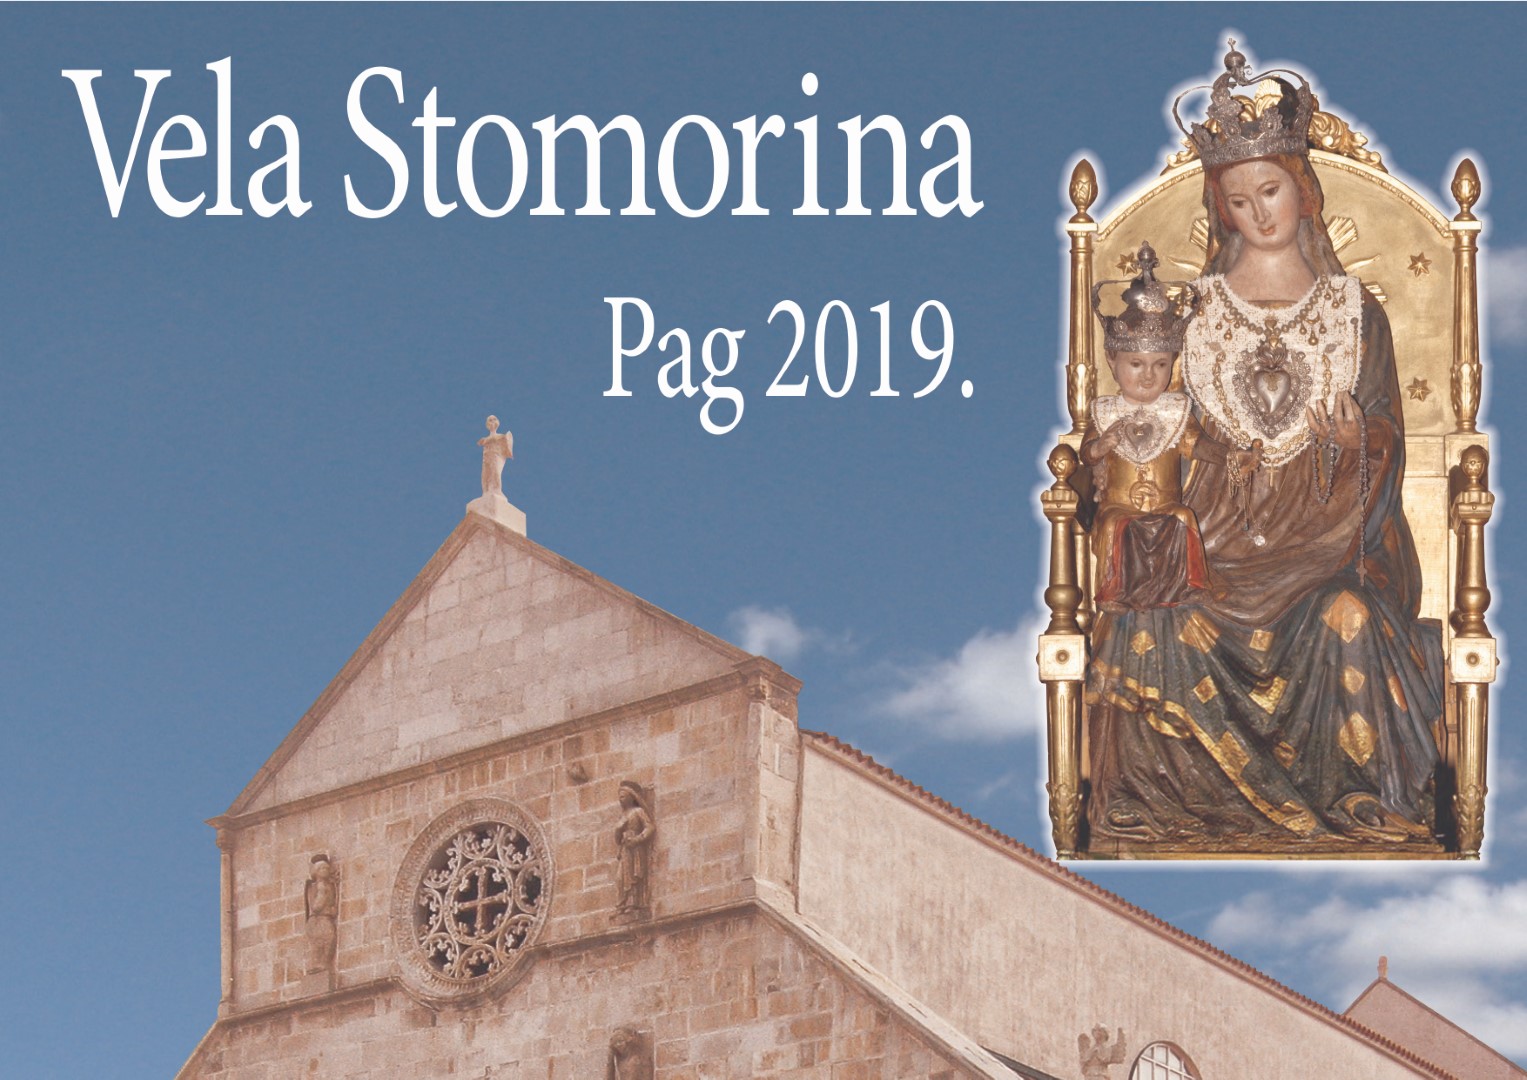 Vela Stomorina, Pag 2019